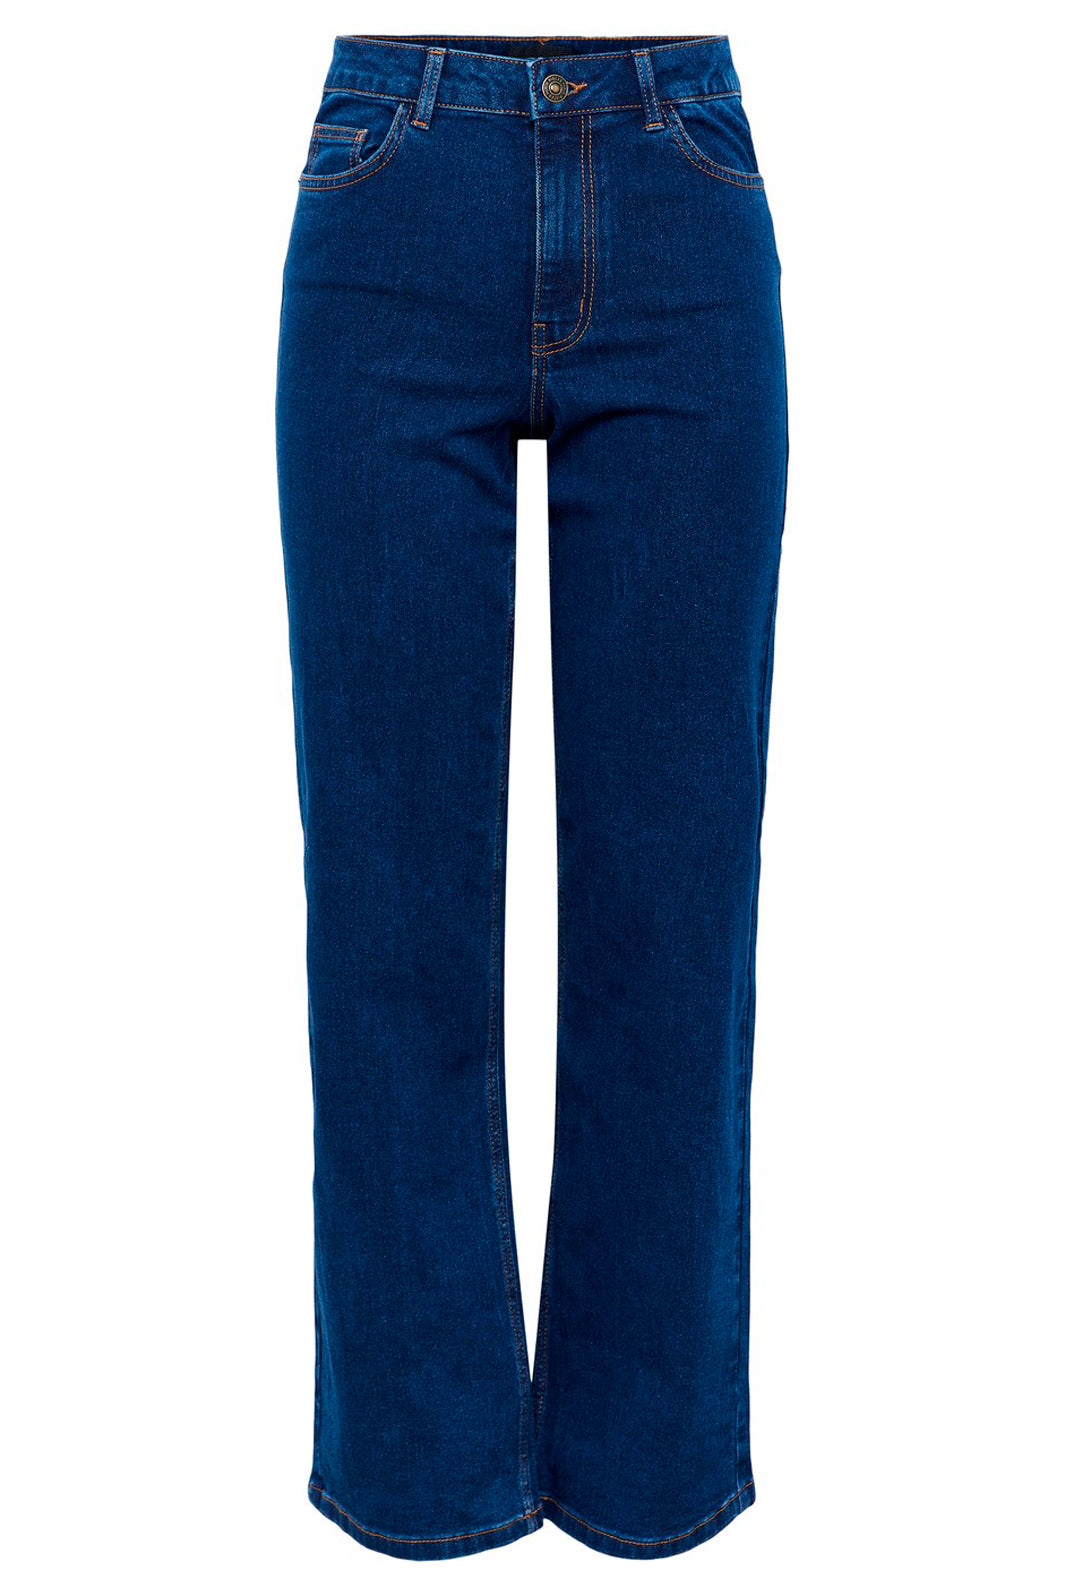 Pieces - PcPeggy Hw Wide Pant Db Noos Bc - Dark Blue Denim Jeans 